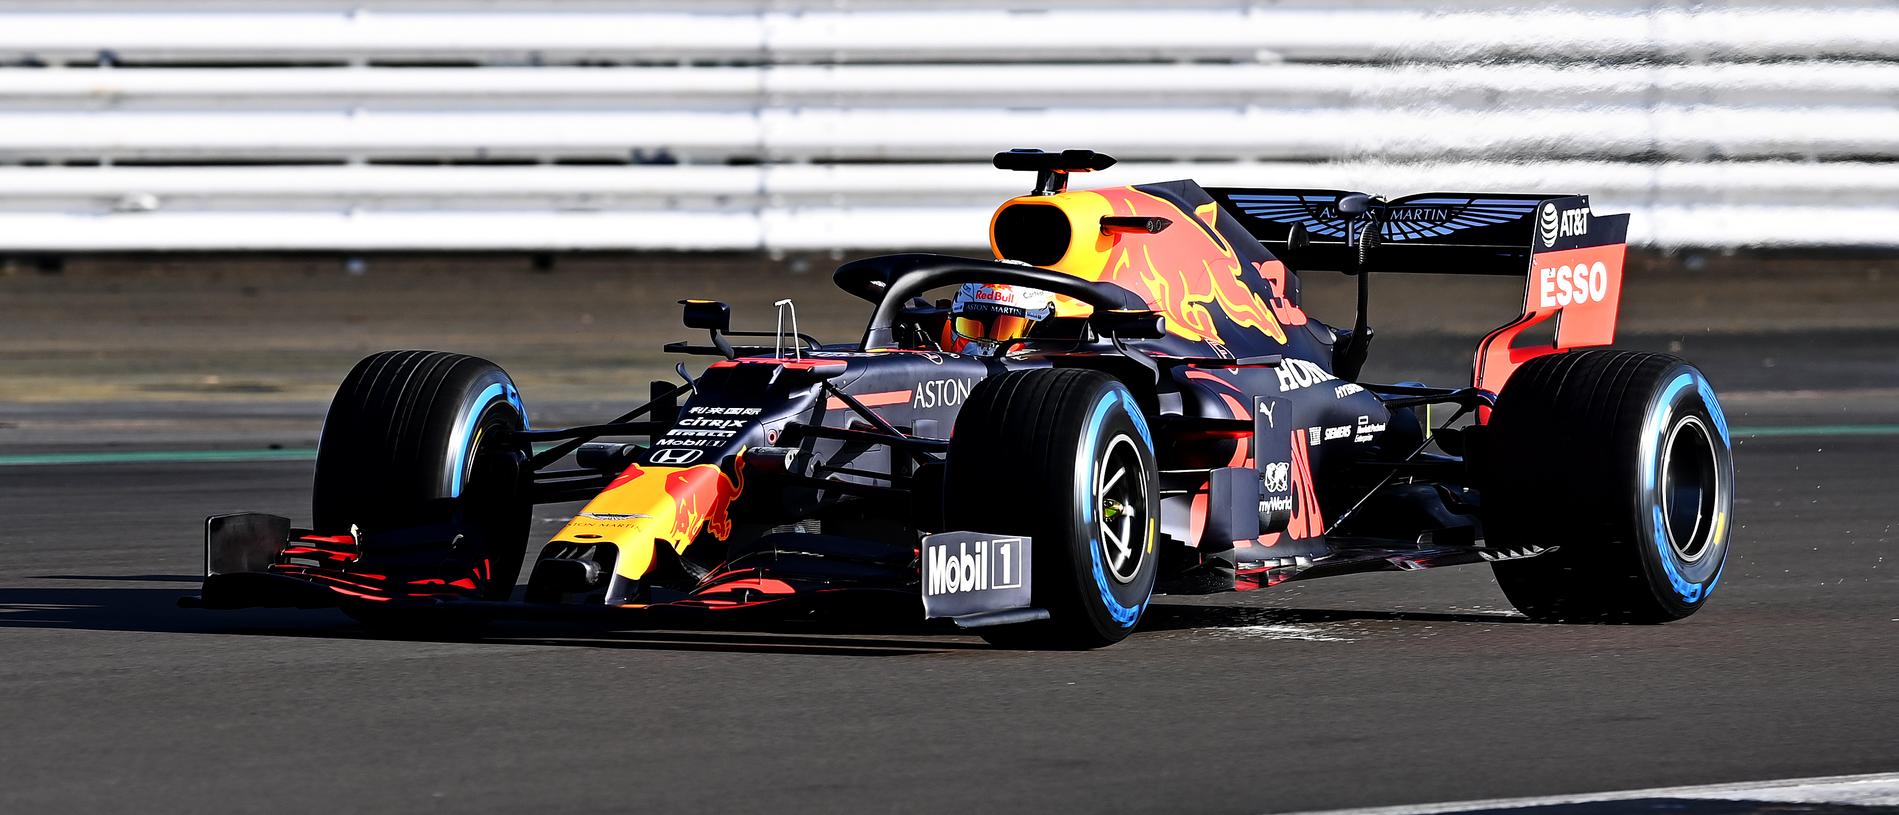 F1 Red Bull Racing F1 2020 livery, F1 news 2020